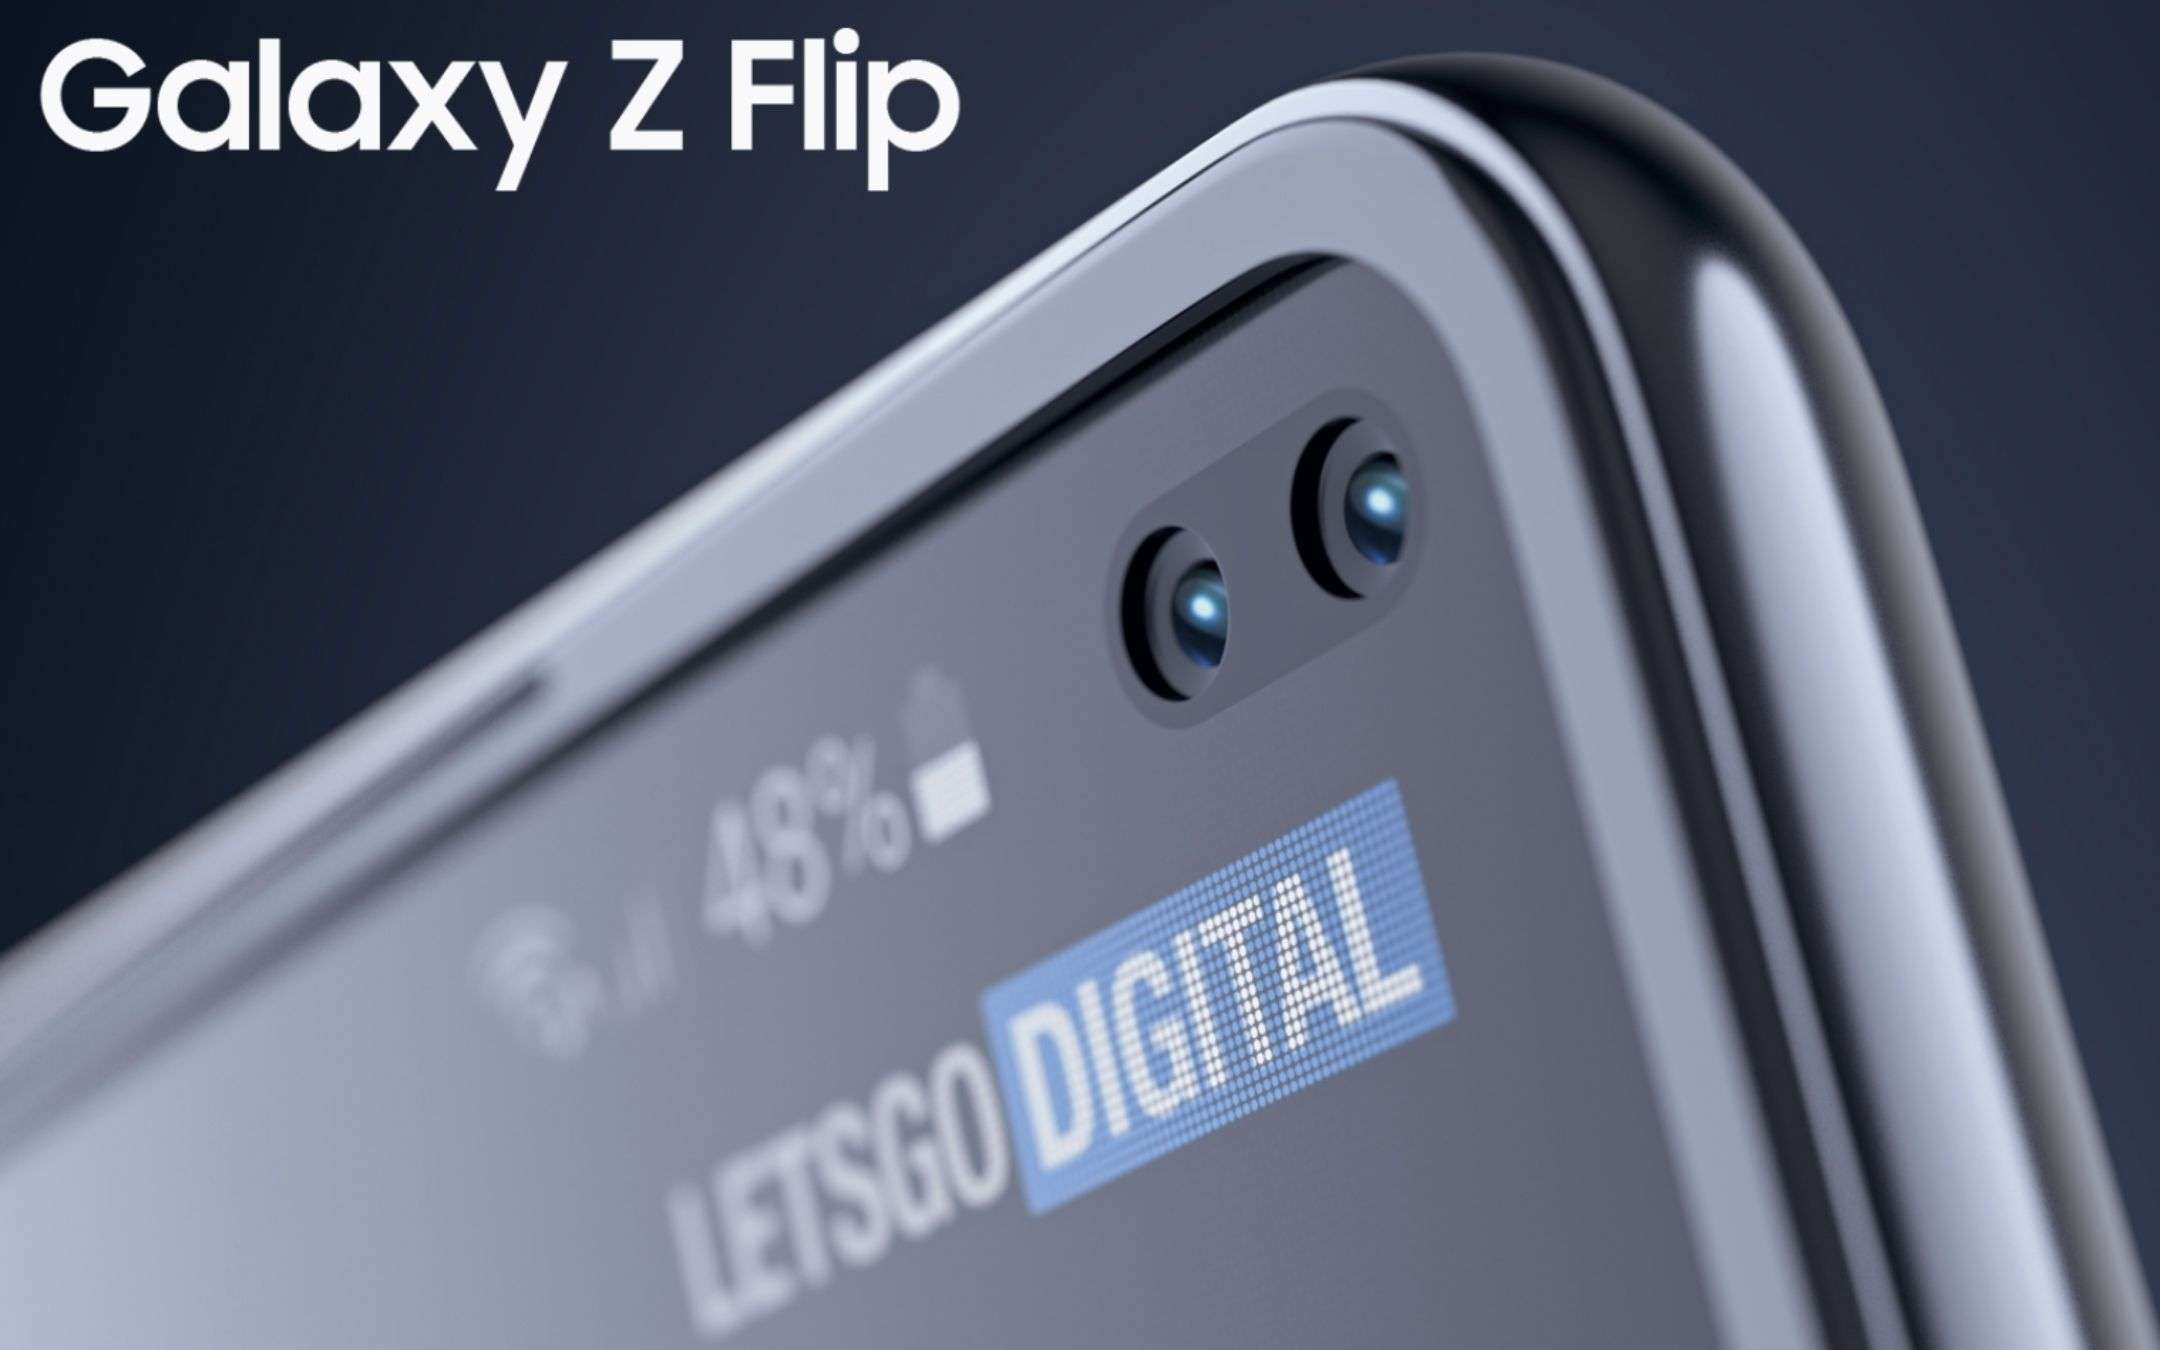 Samsung Galaxy Z Flip 2021: e se fosse così? (FOTO)